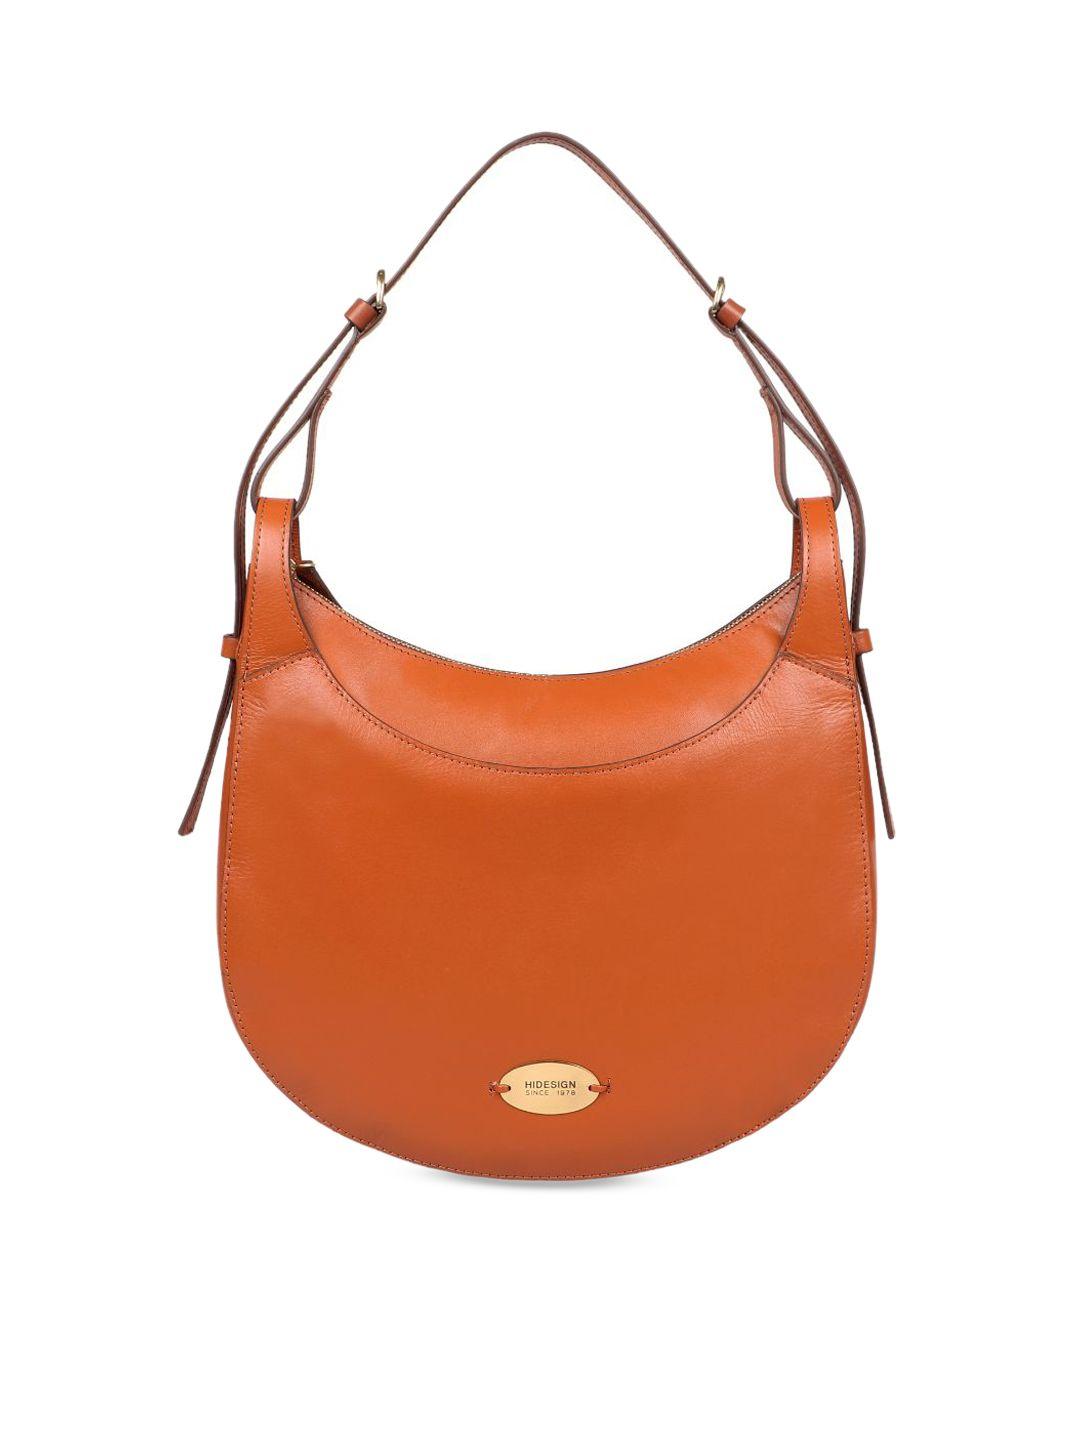 hidesign women orange solid leather half moon hobo bag